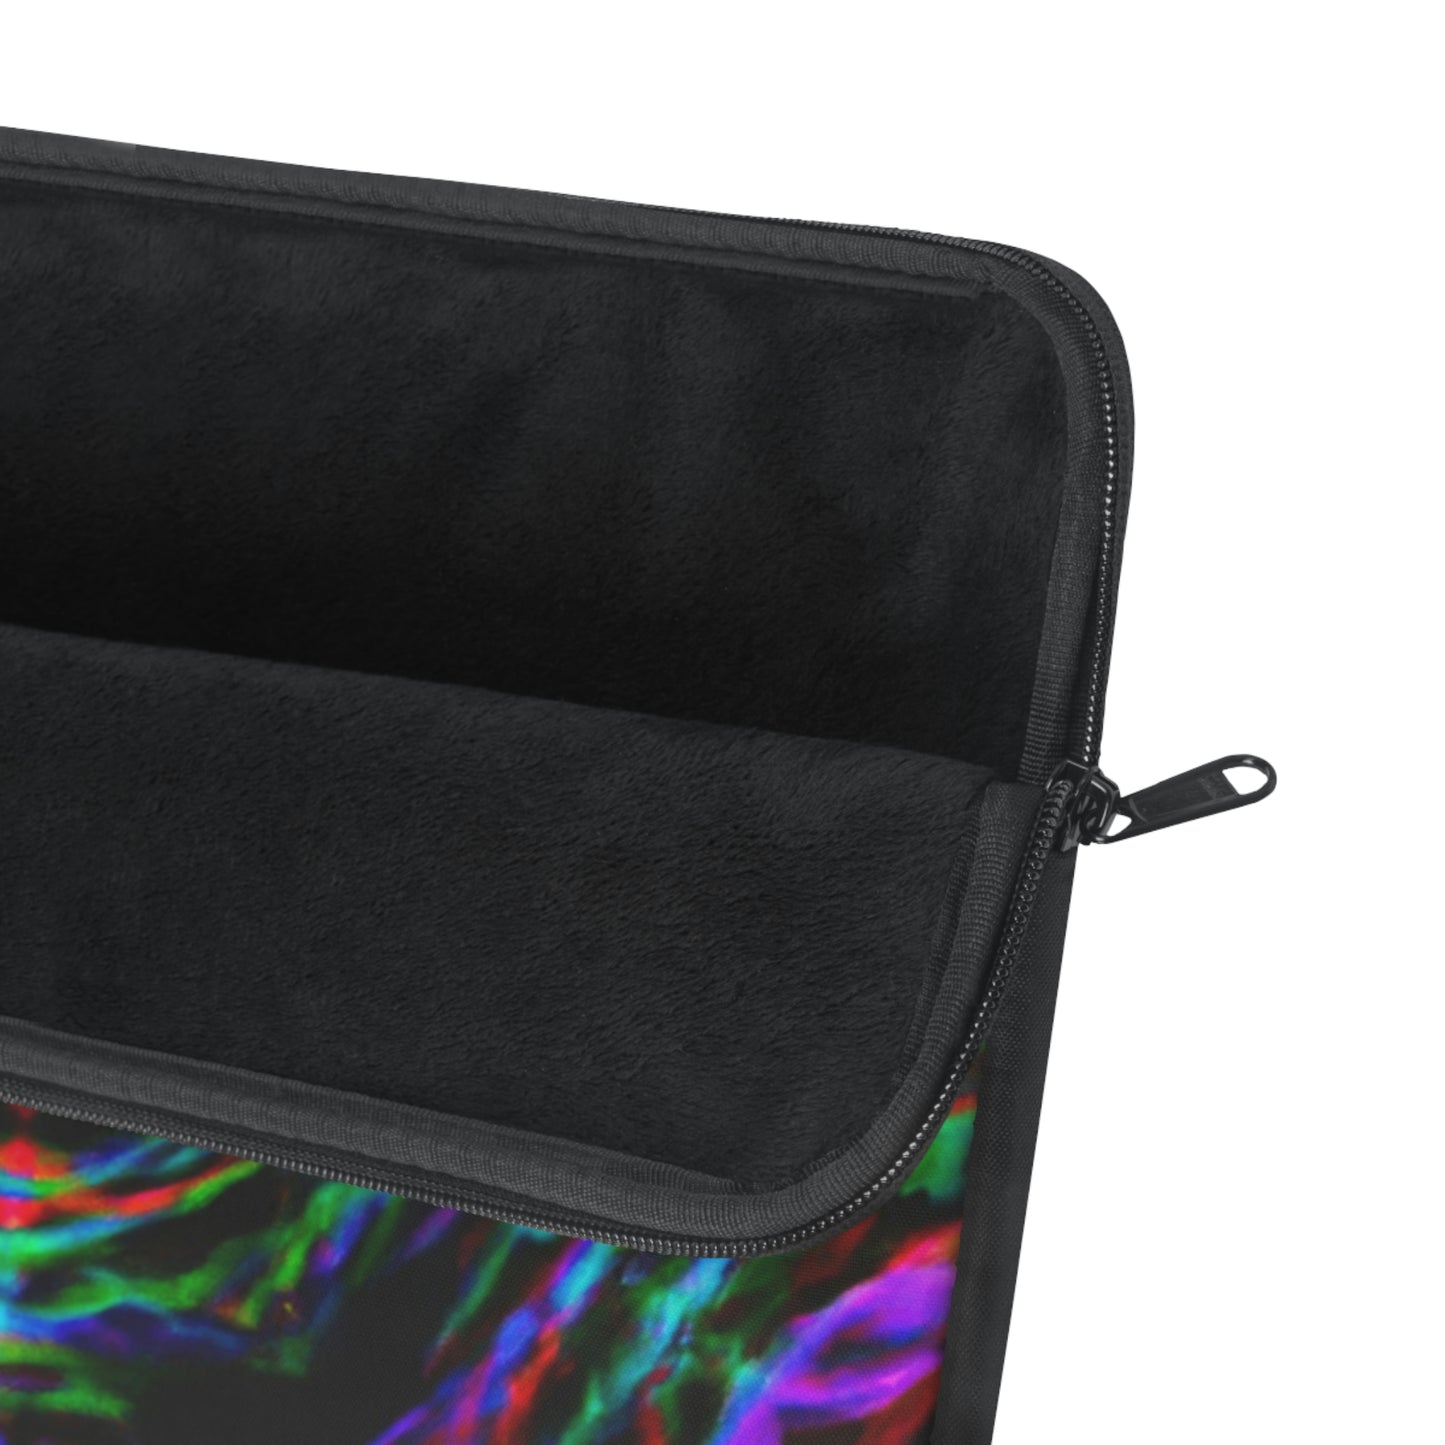 Tilly 'Yo-Yo' Johnson - Psychedelic Laptop Computer Sleeve Storage Case Bag